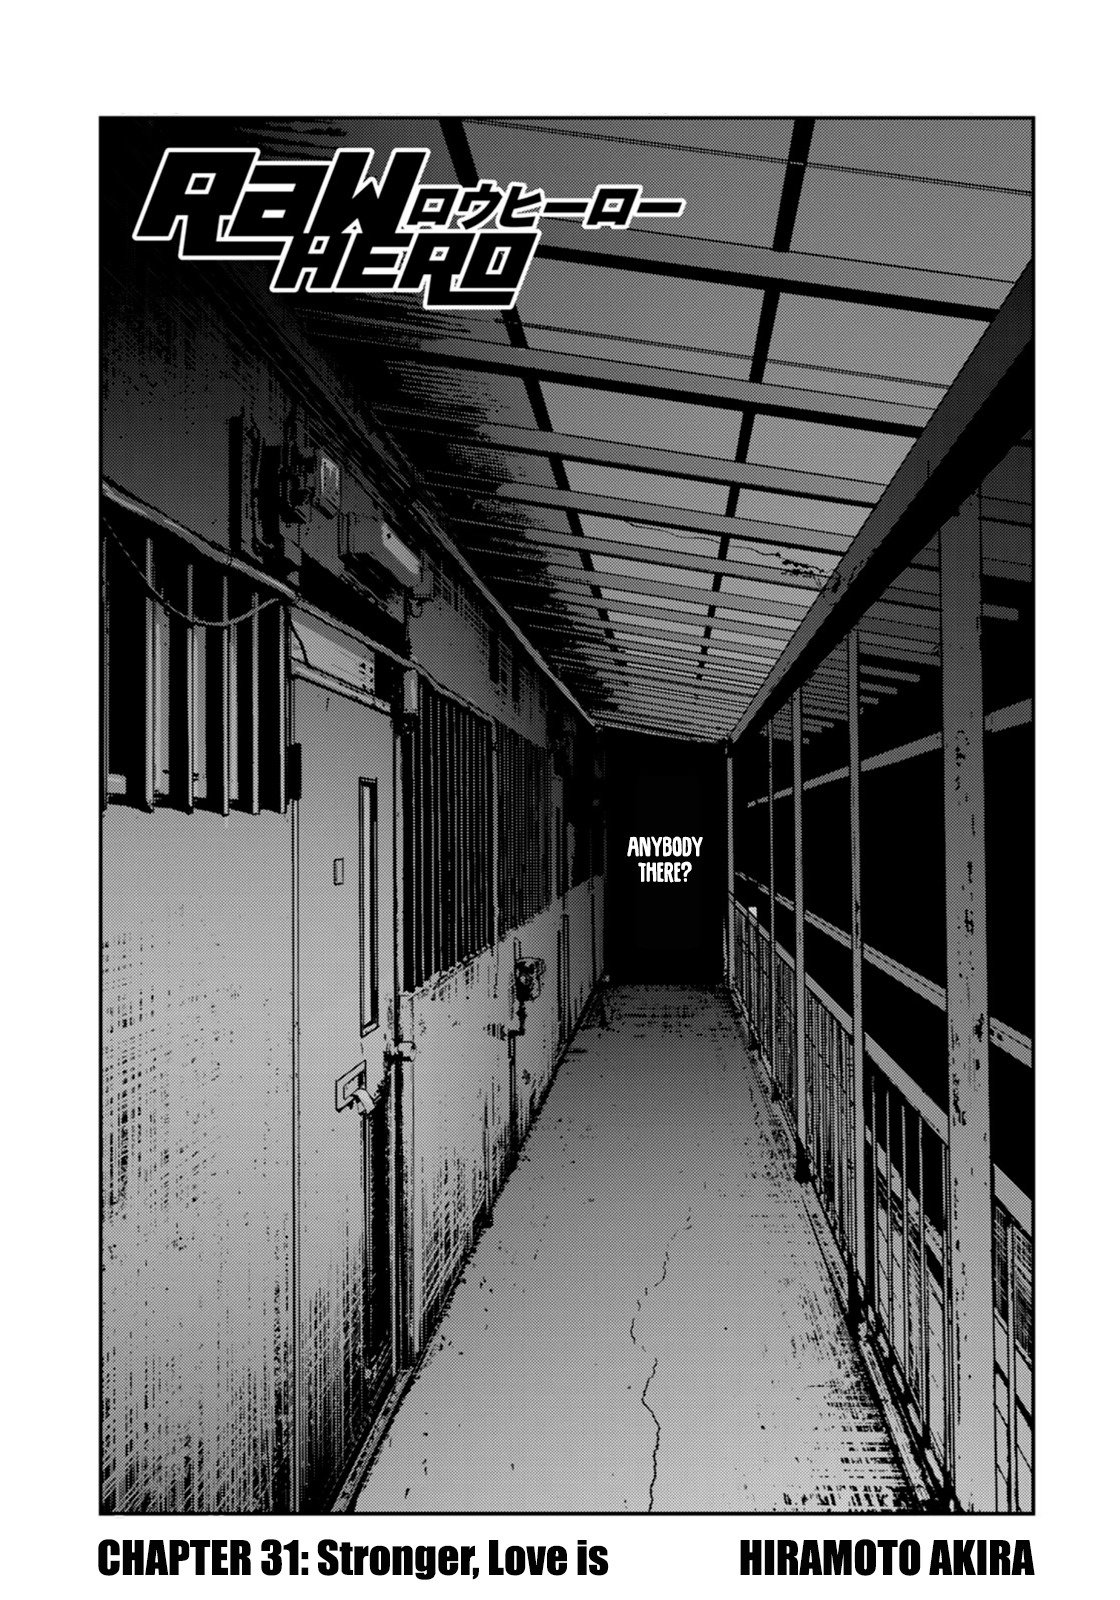 RaW Hero vol.5 ch.31